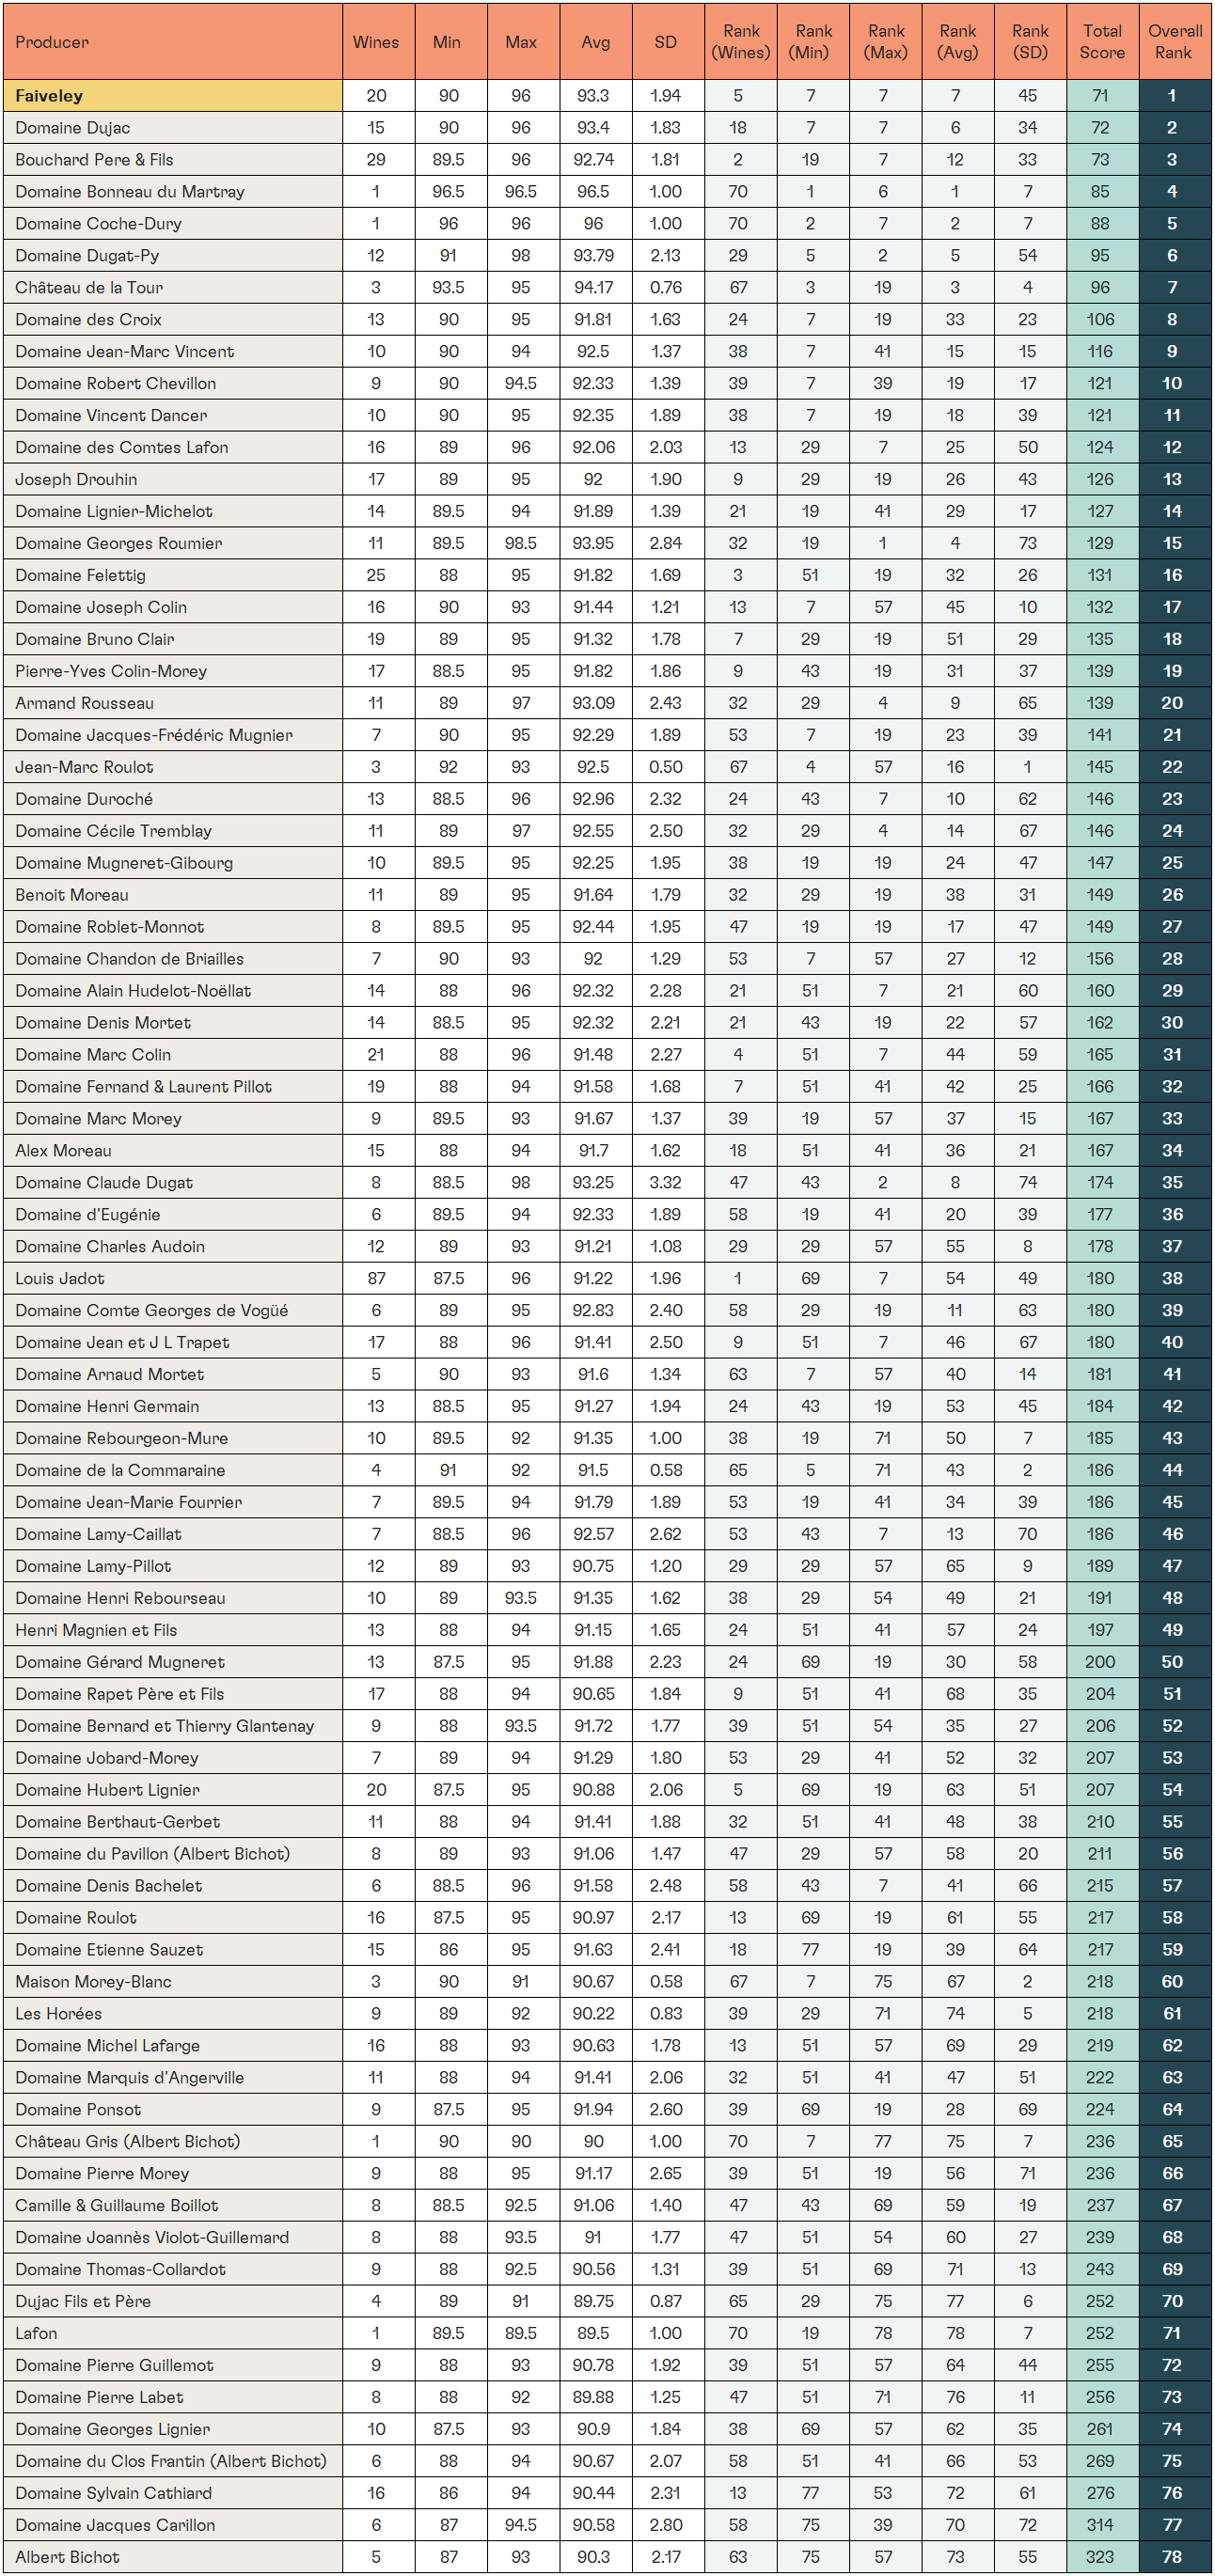 Full Ranking Table